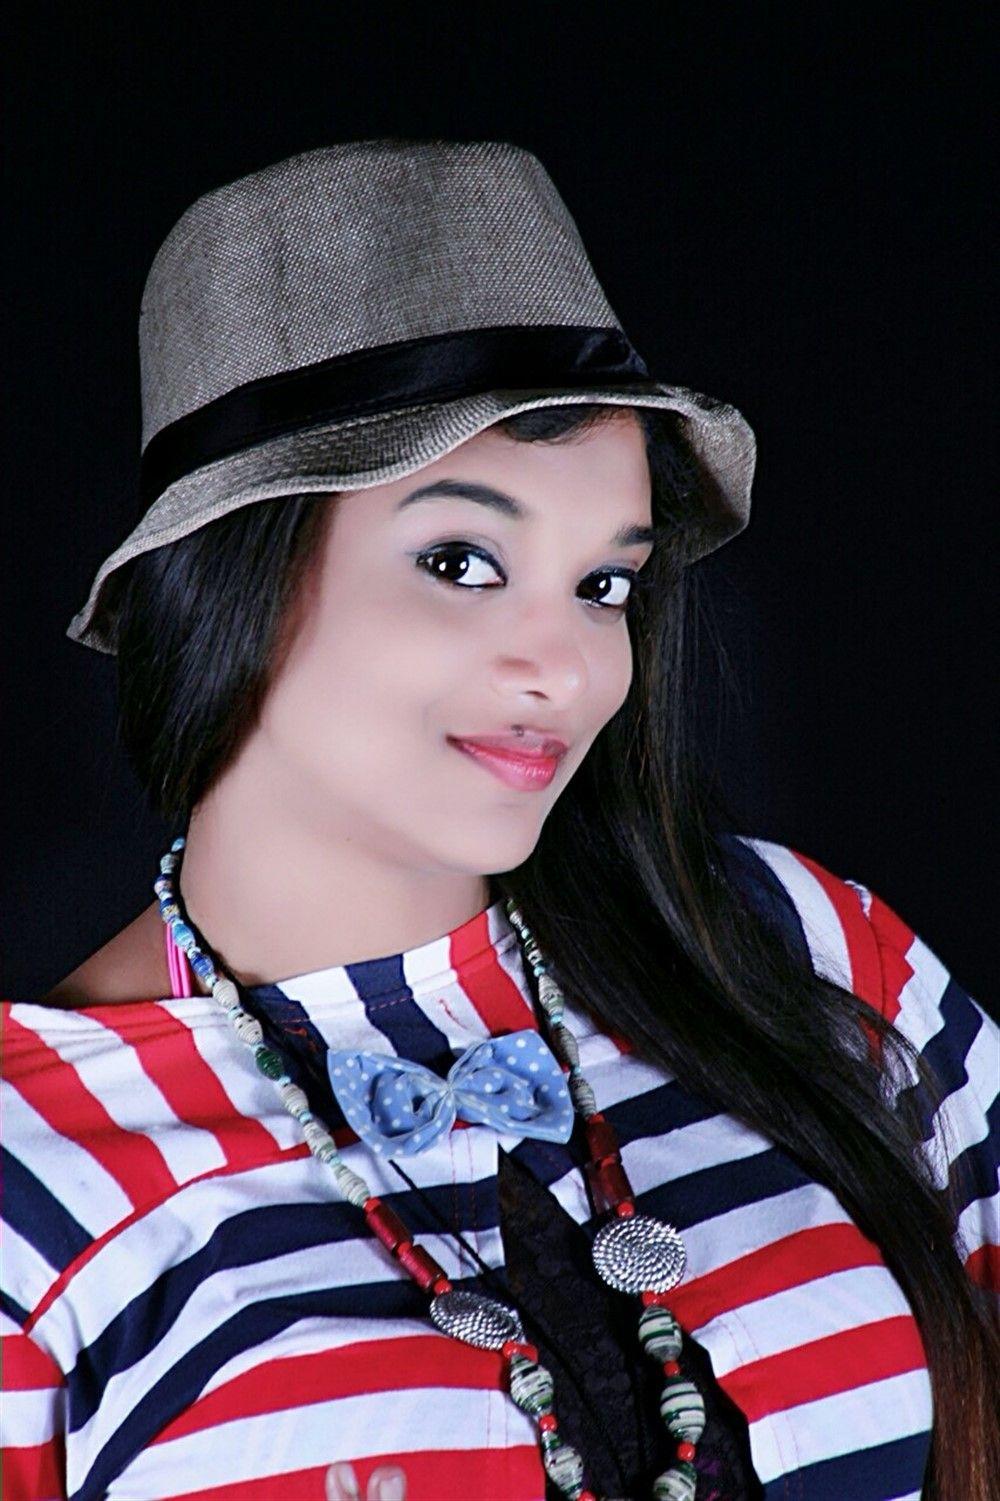 Telugu Actress Rekha Boj Hot & Spicy Unseen Photo Stills